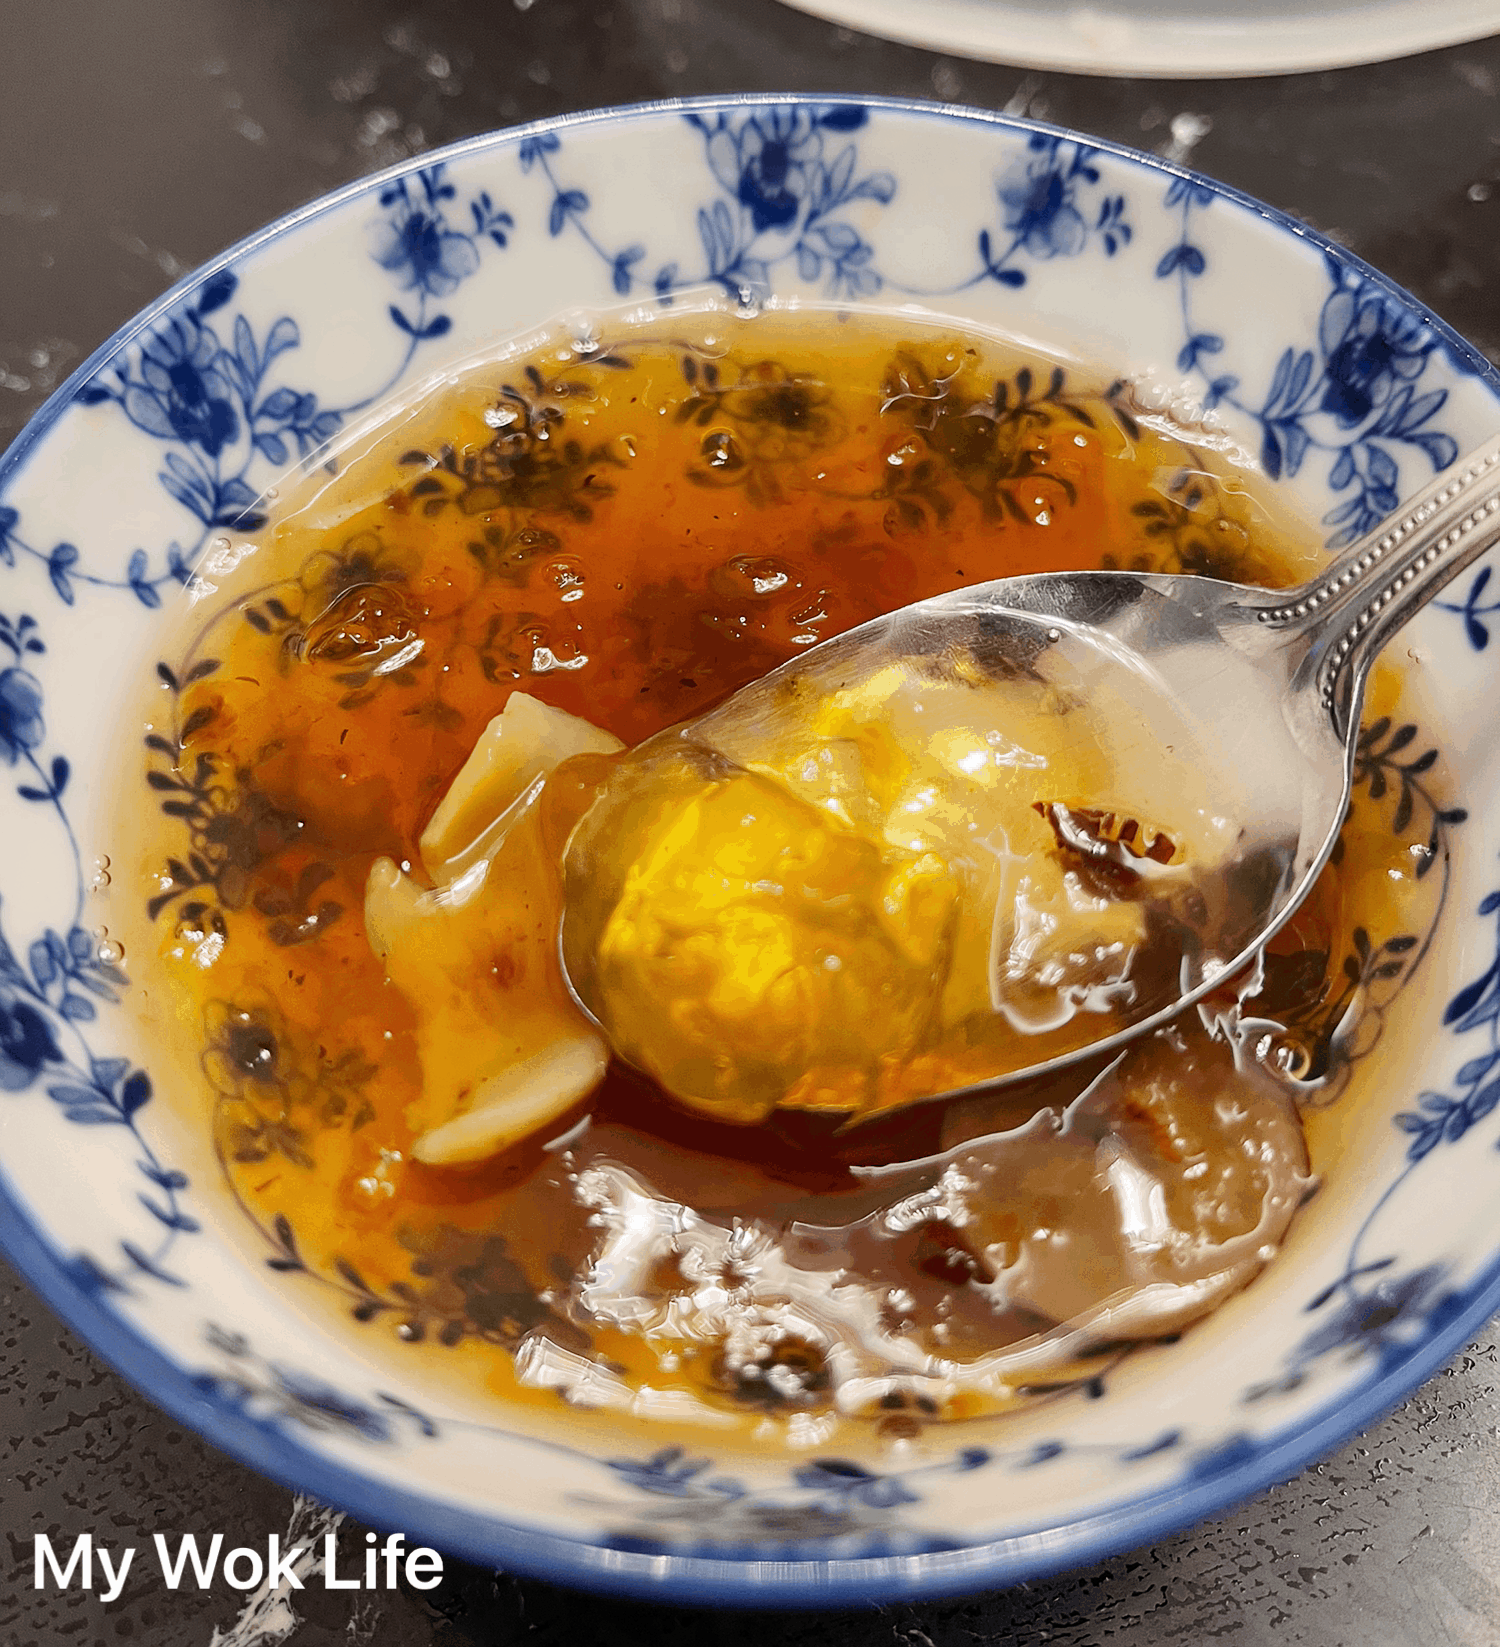 My Wok Life Cooking Blog - Easy Peach Gum & Snow Lotus Seed Dessert Soup Recipe (桃胶雪莲子糖水) -